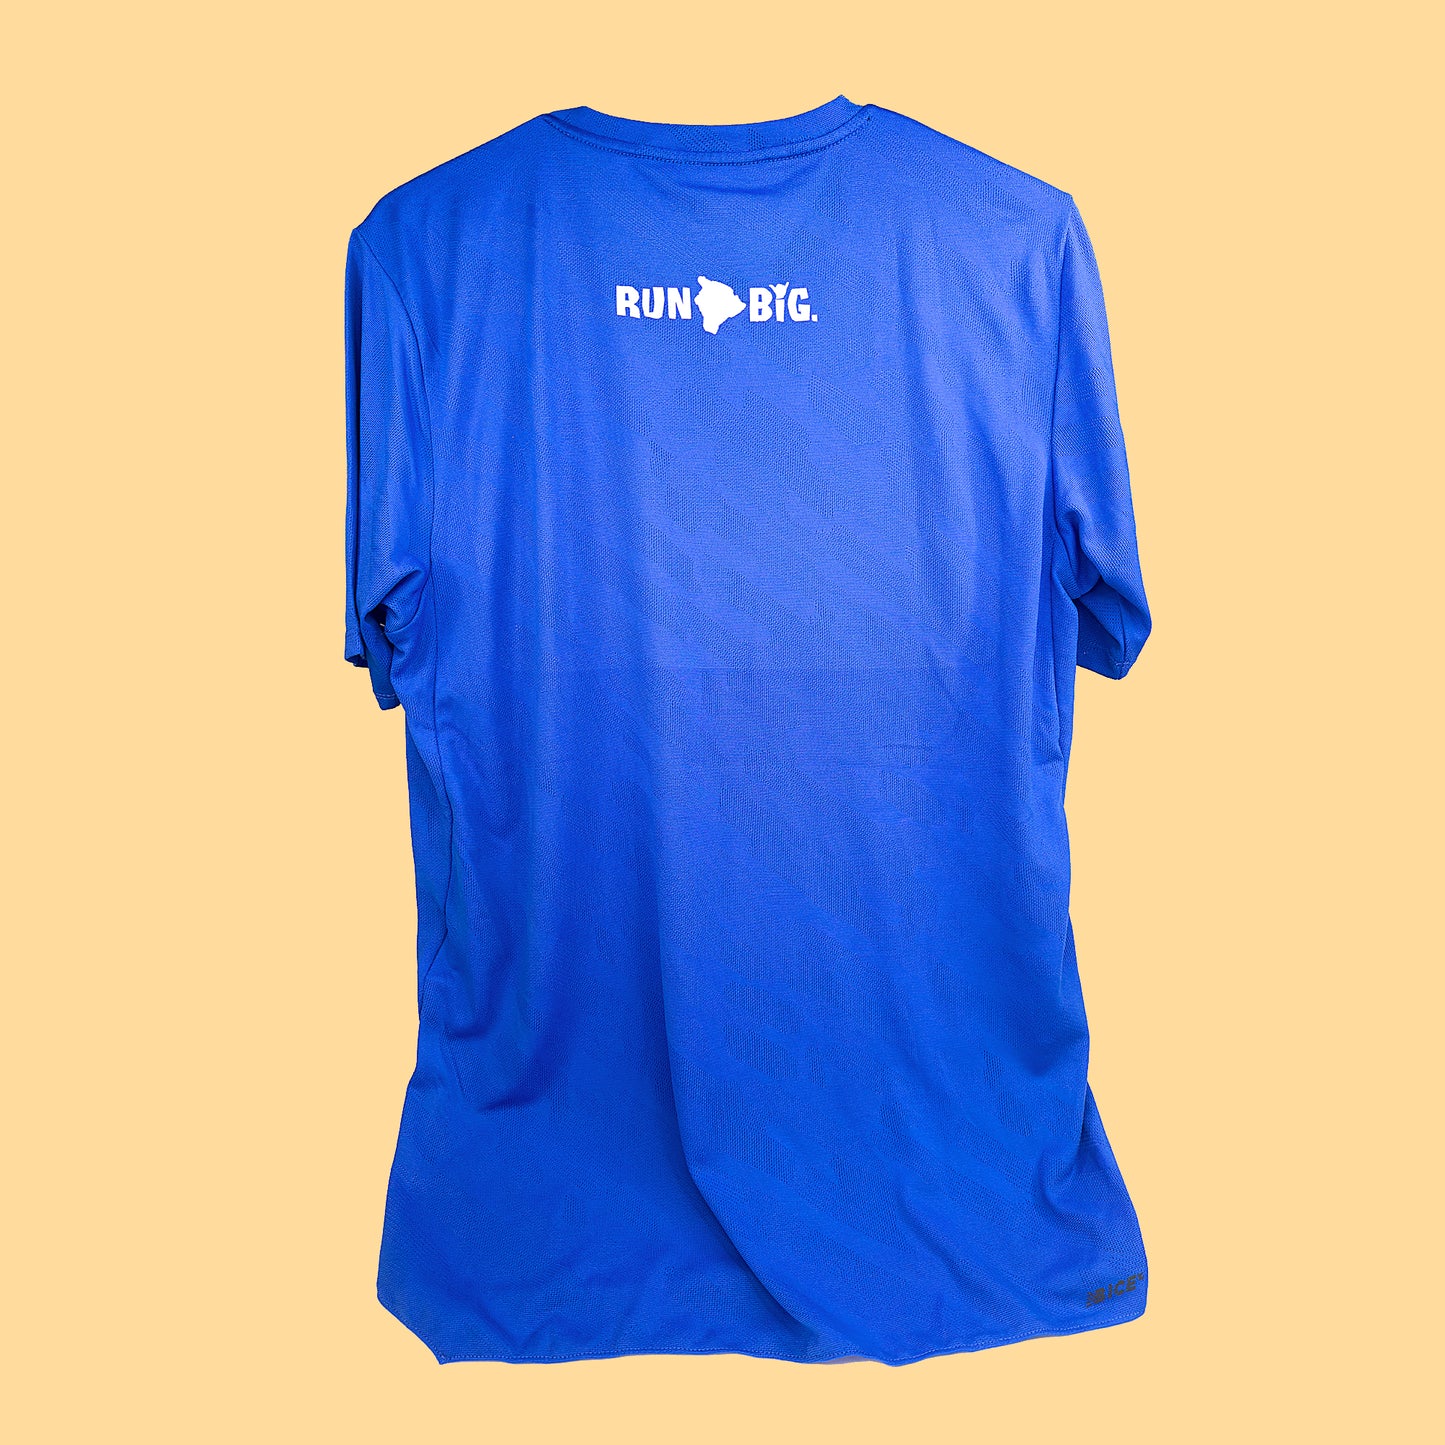 Men's Q Speed Running Shirt - Short Sleeve - Run Aloha